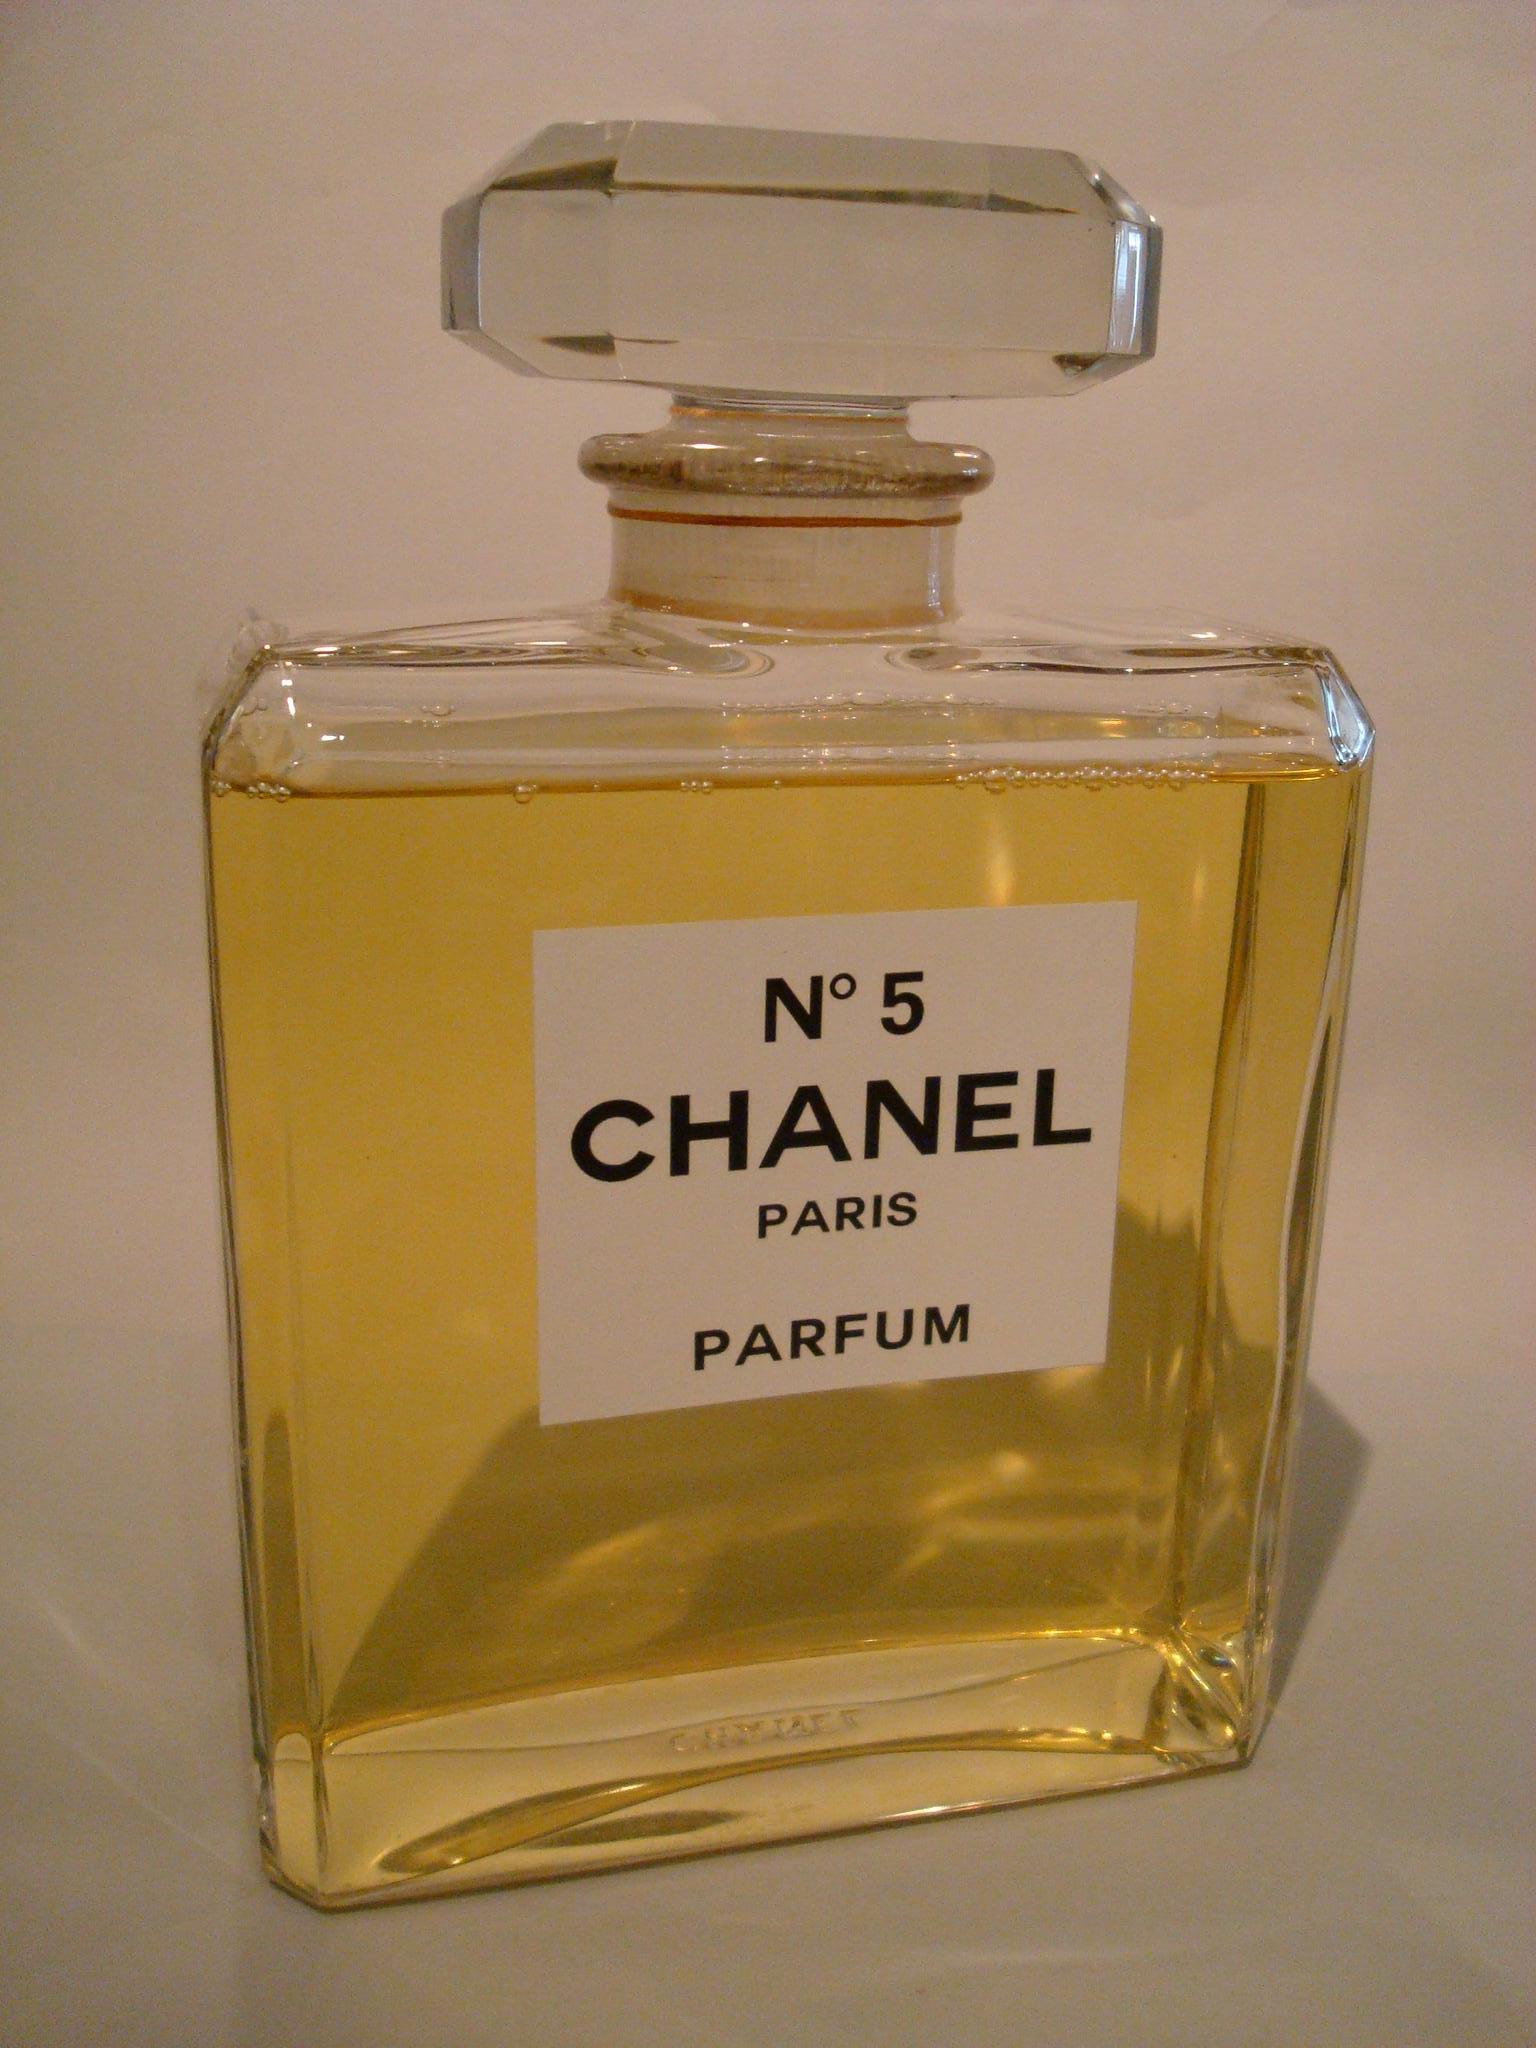 Chanel N5 Huge Store Display Perfume Bottle Advertising, France, 20th Century 1